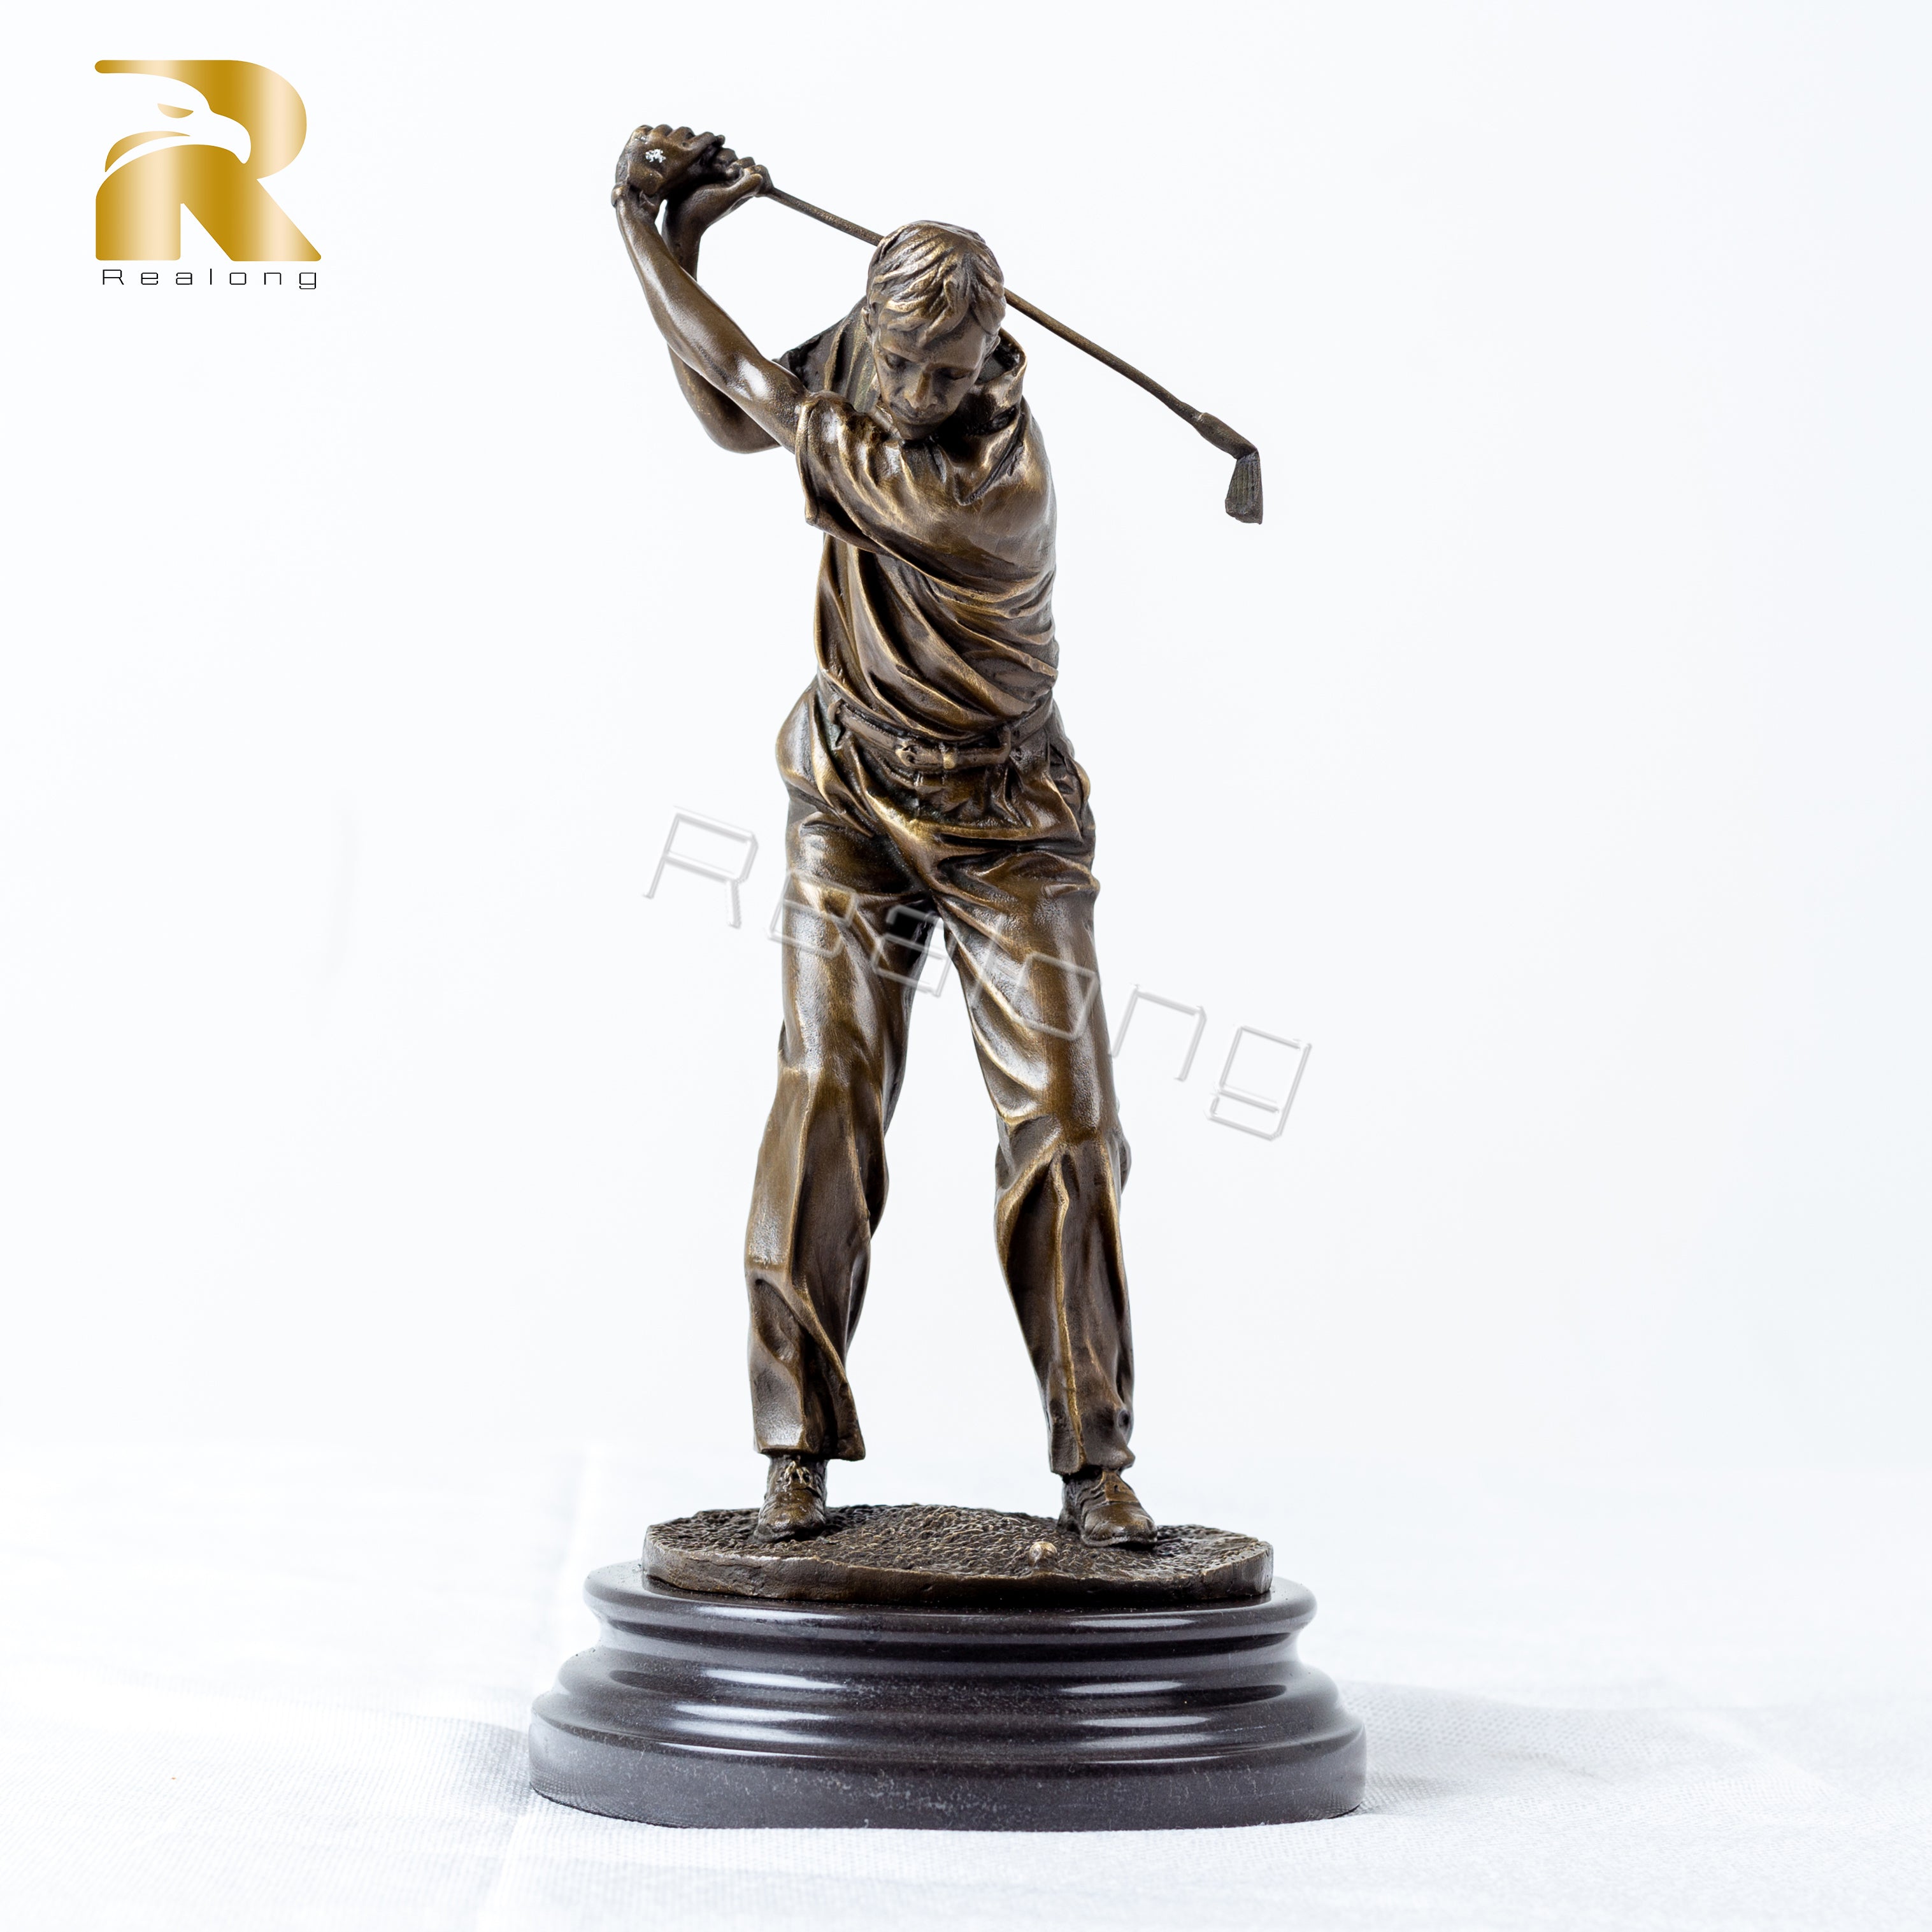 32cm Bronze Golf Man Statue Playing Golf Sculpture Bronze Golfer Art Figurine Bronze Casting Crafts Ornament For Home Decor Gift